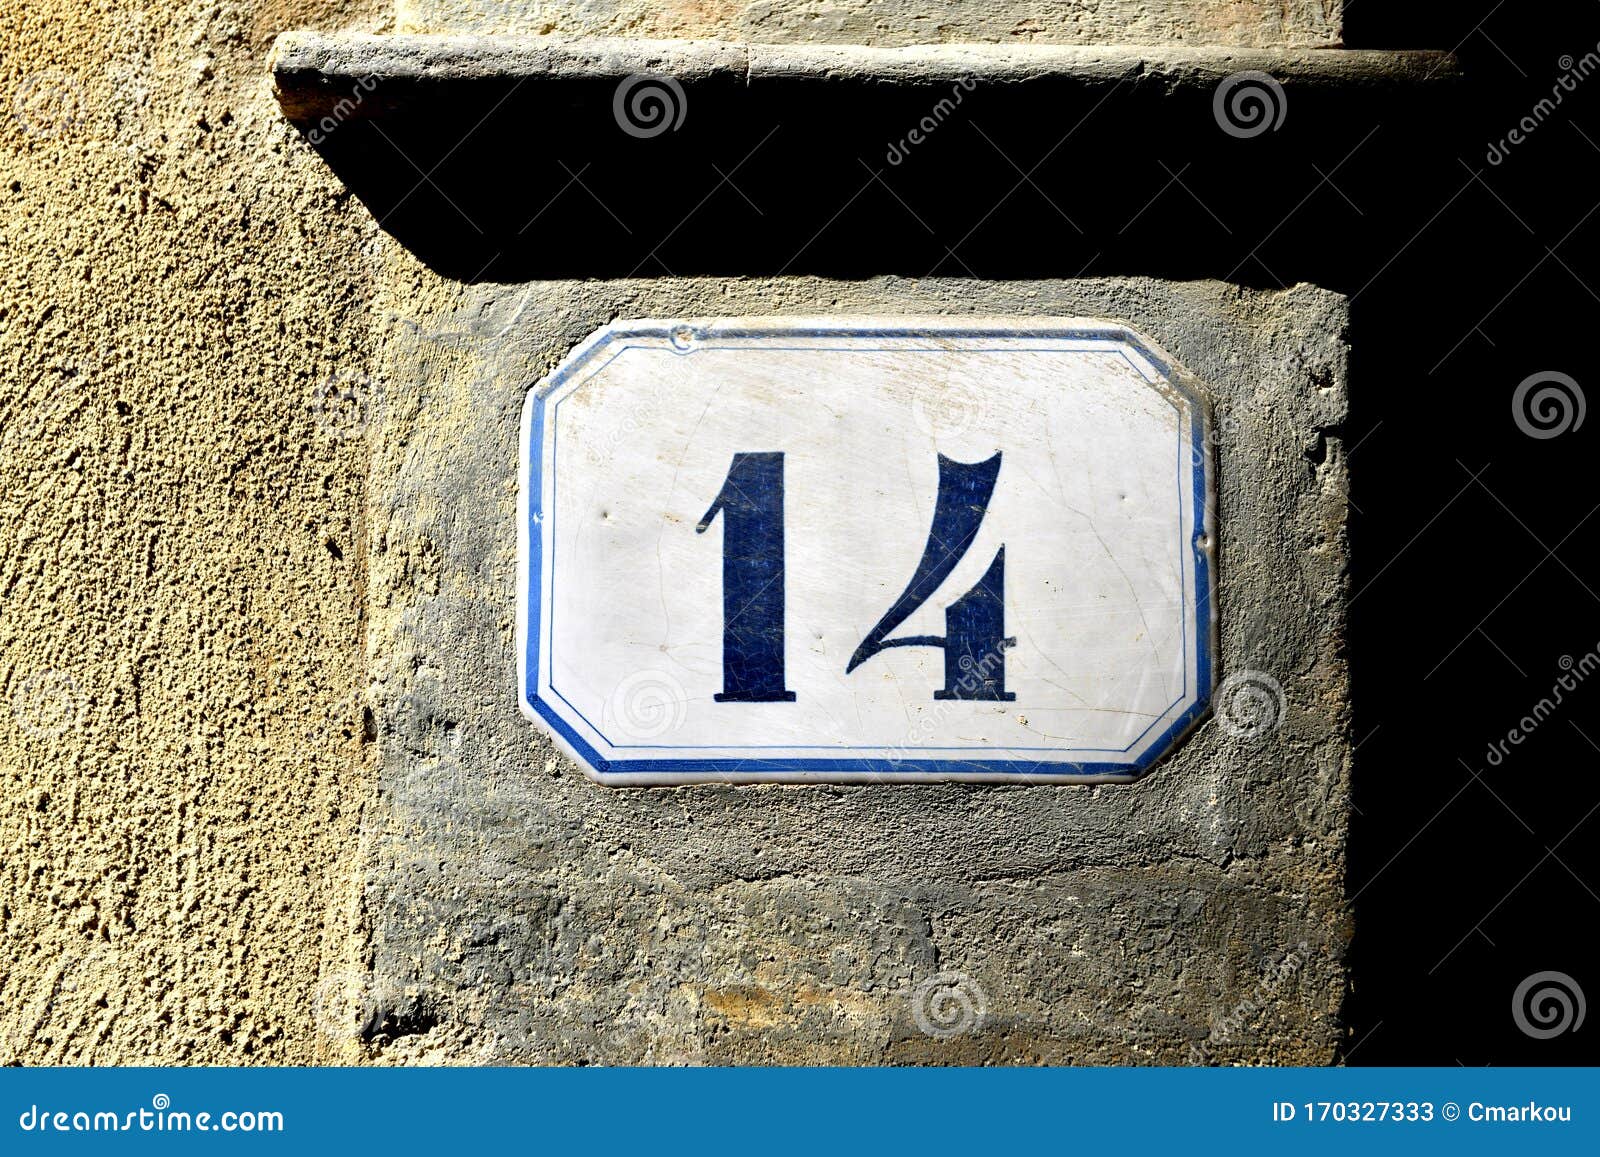 house number 14 outside an italian house